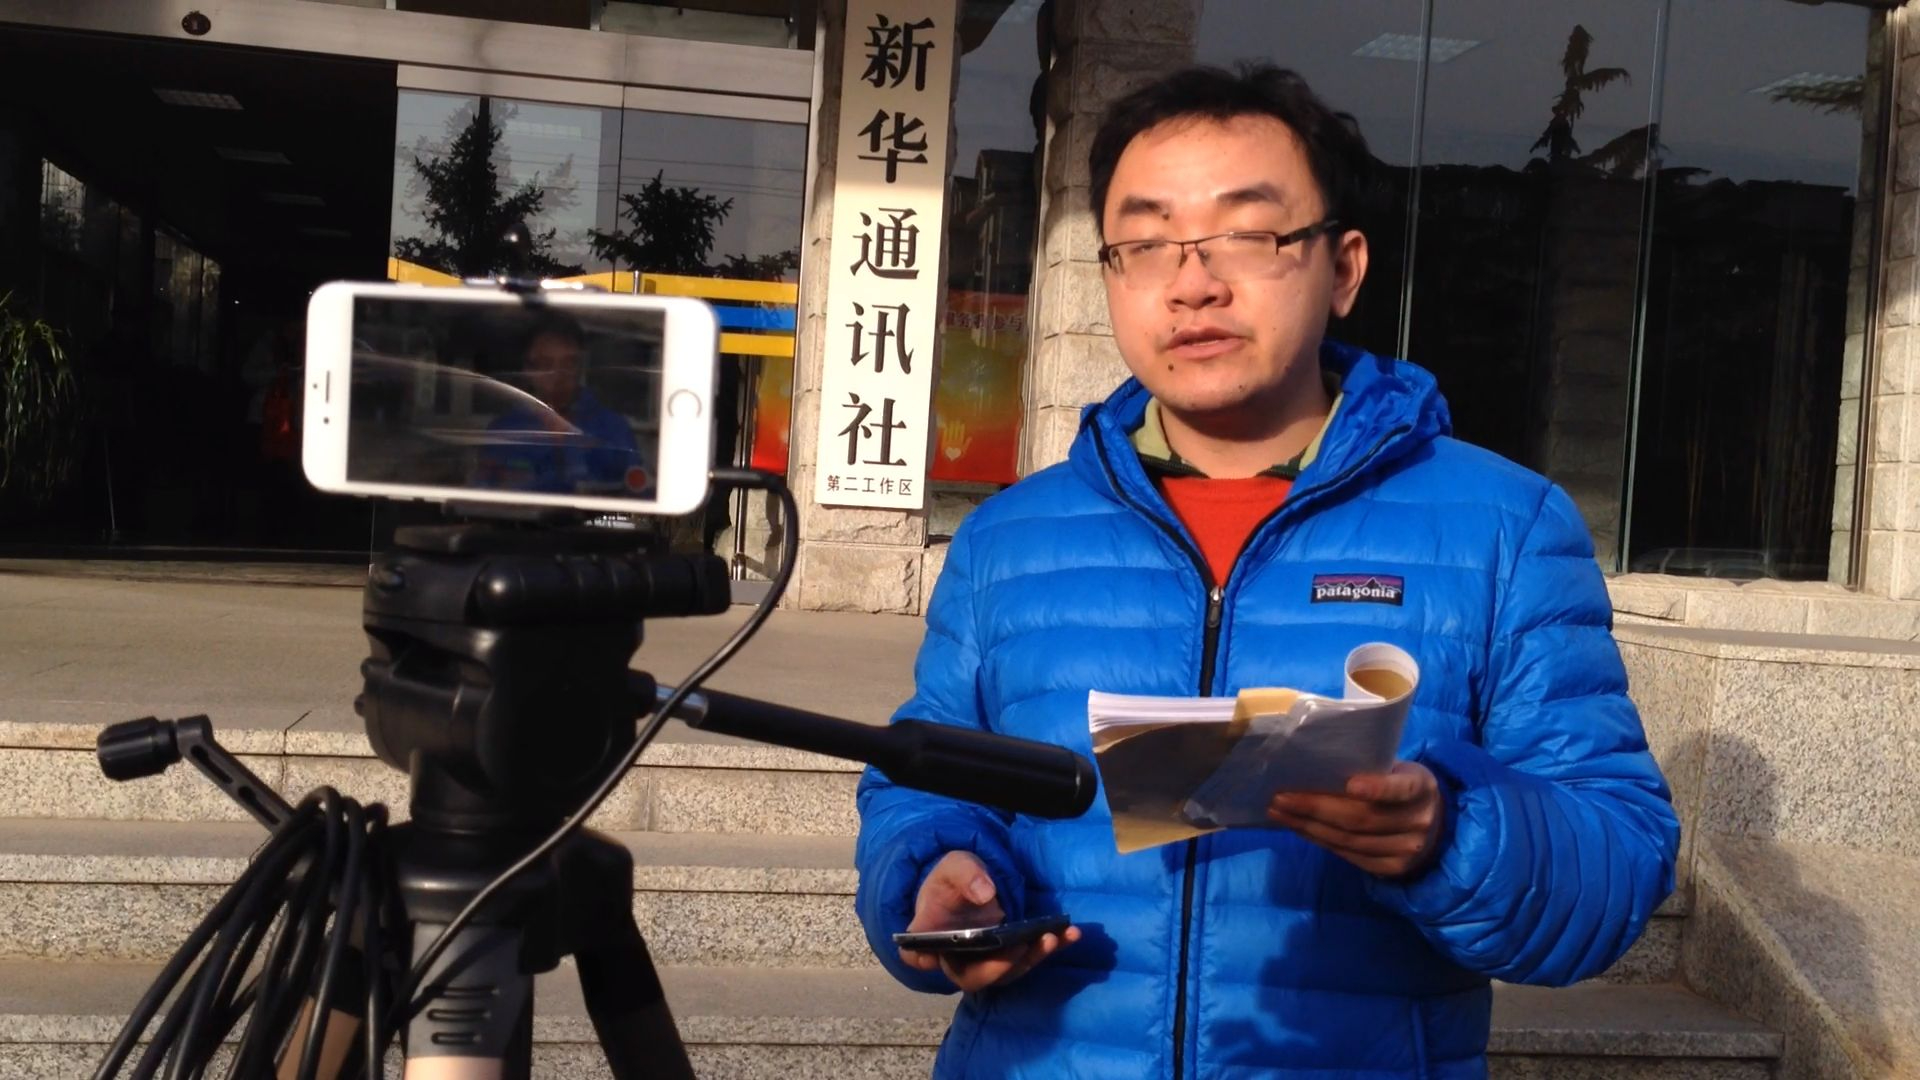 China: Building a long-lasting partnership with an international media organisation